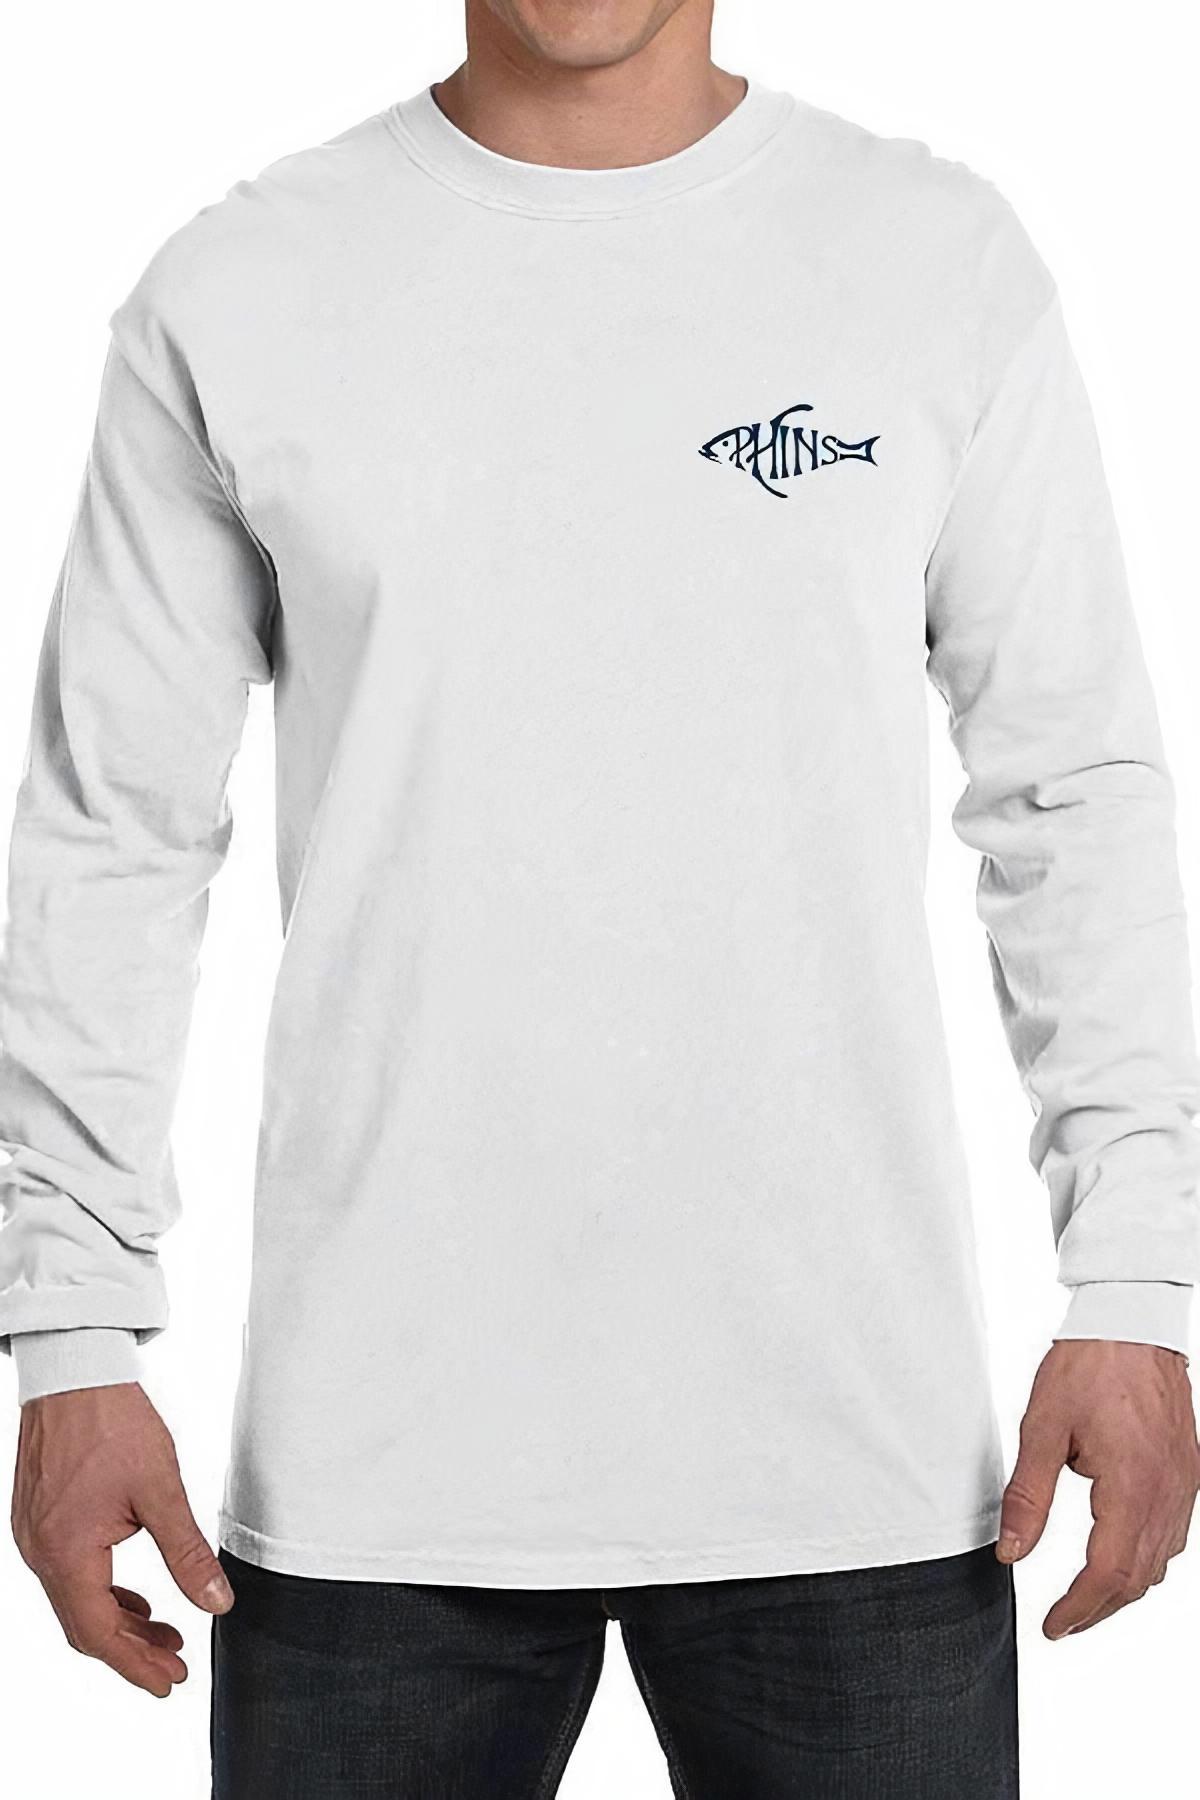 Yellowfin Tuna - Long Sleeve T-Shirt by Phins Apparel